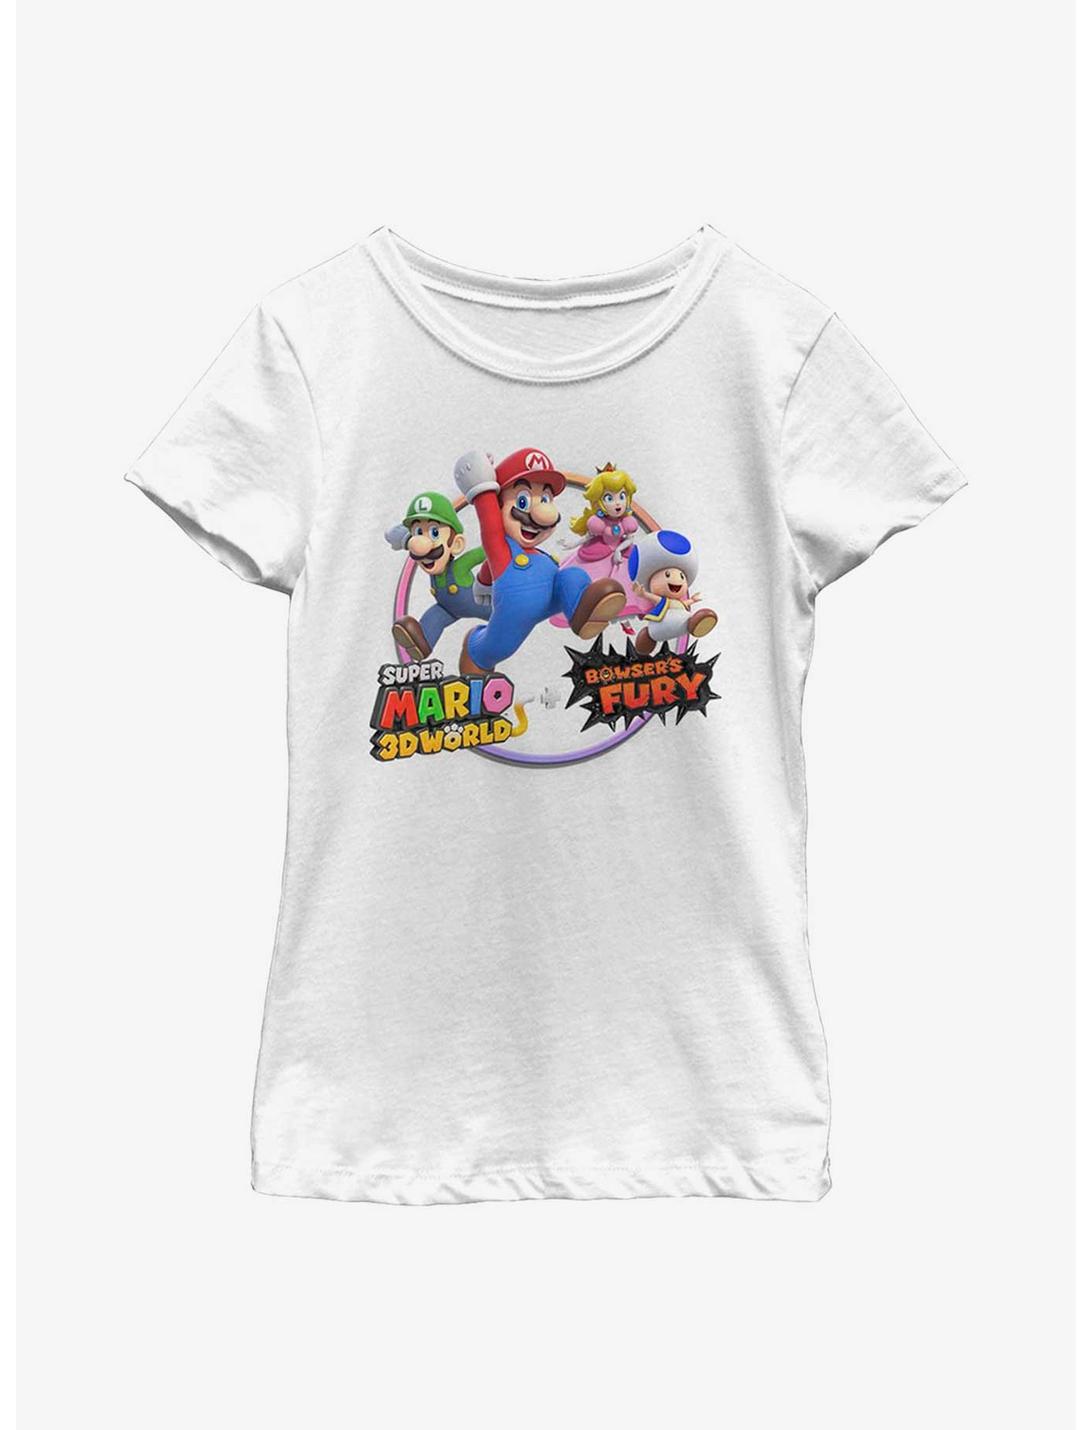 Nintendo Super Mario 3D World Bowser's Fury Group Youth Girl T-Shirt, WHITE, hi-res